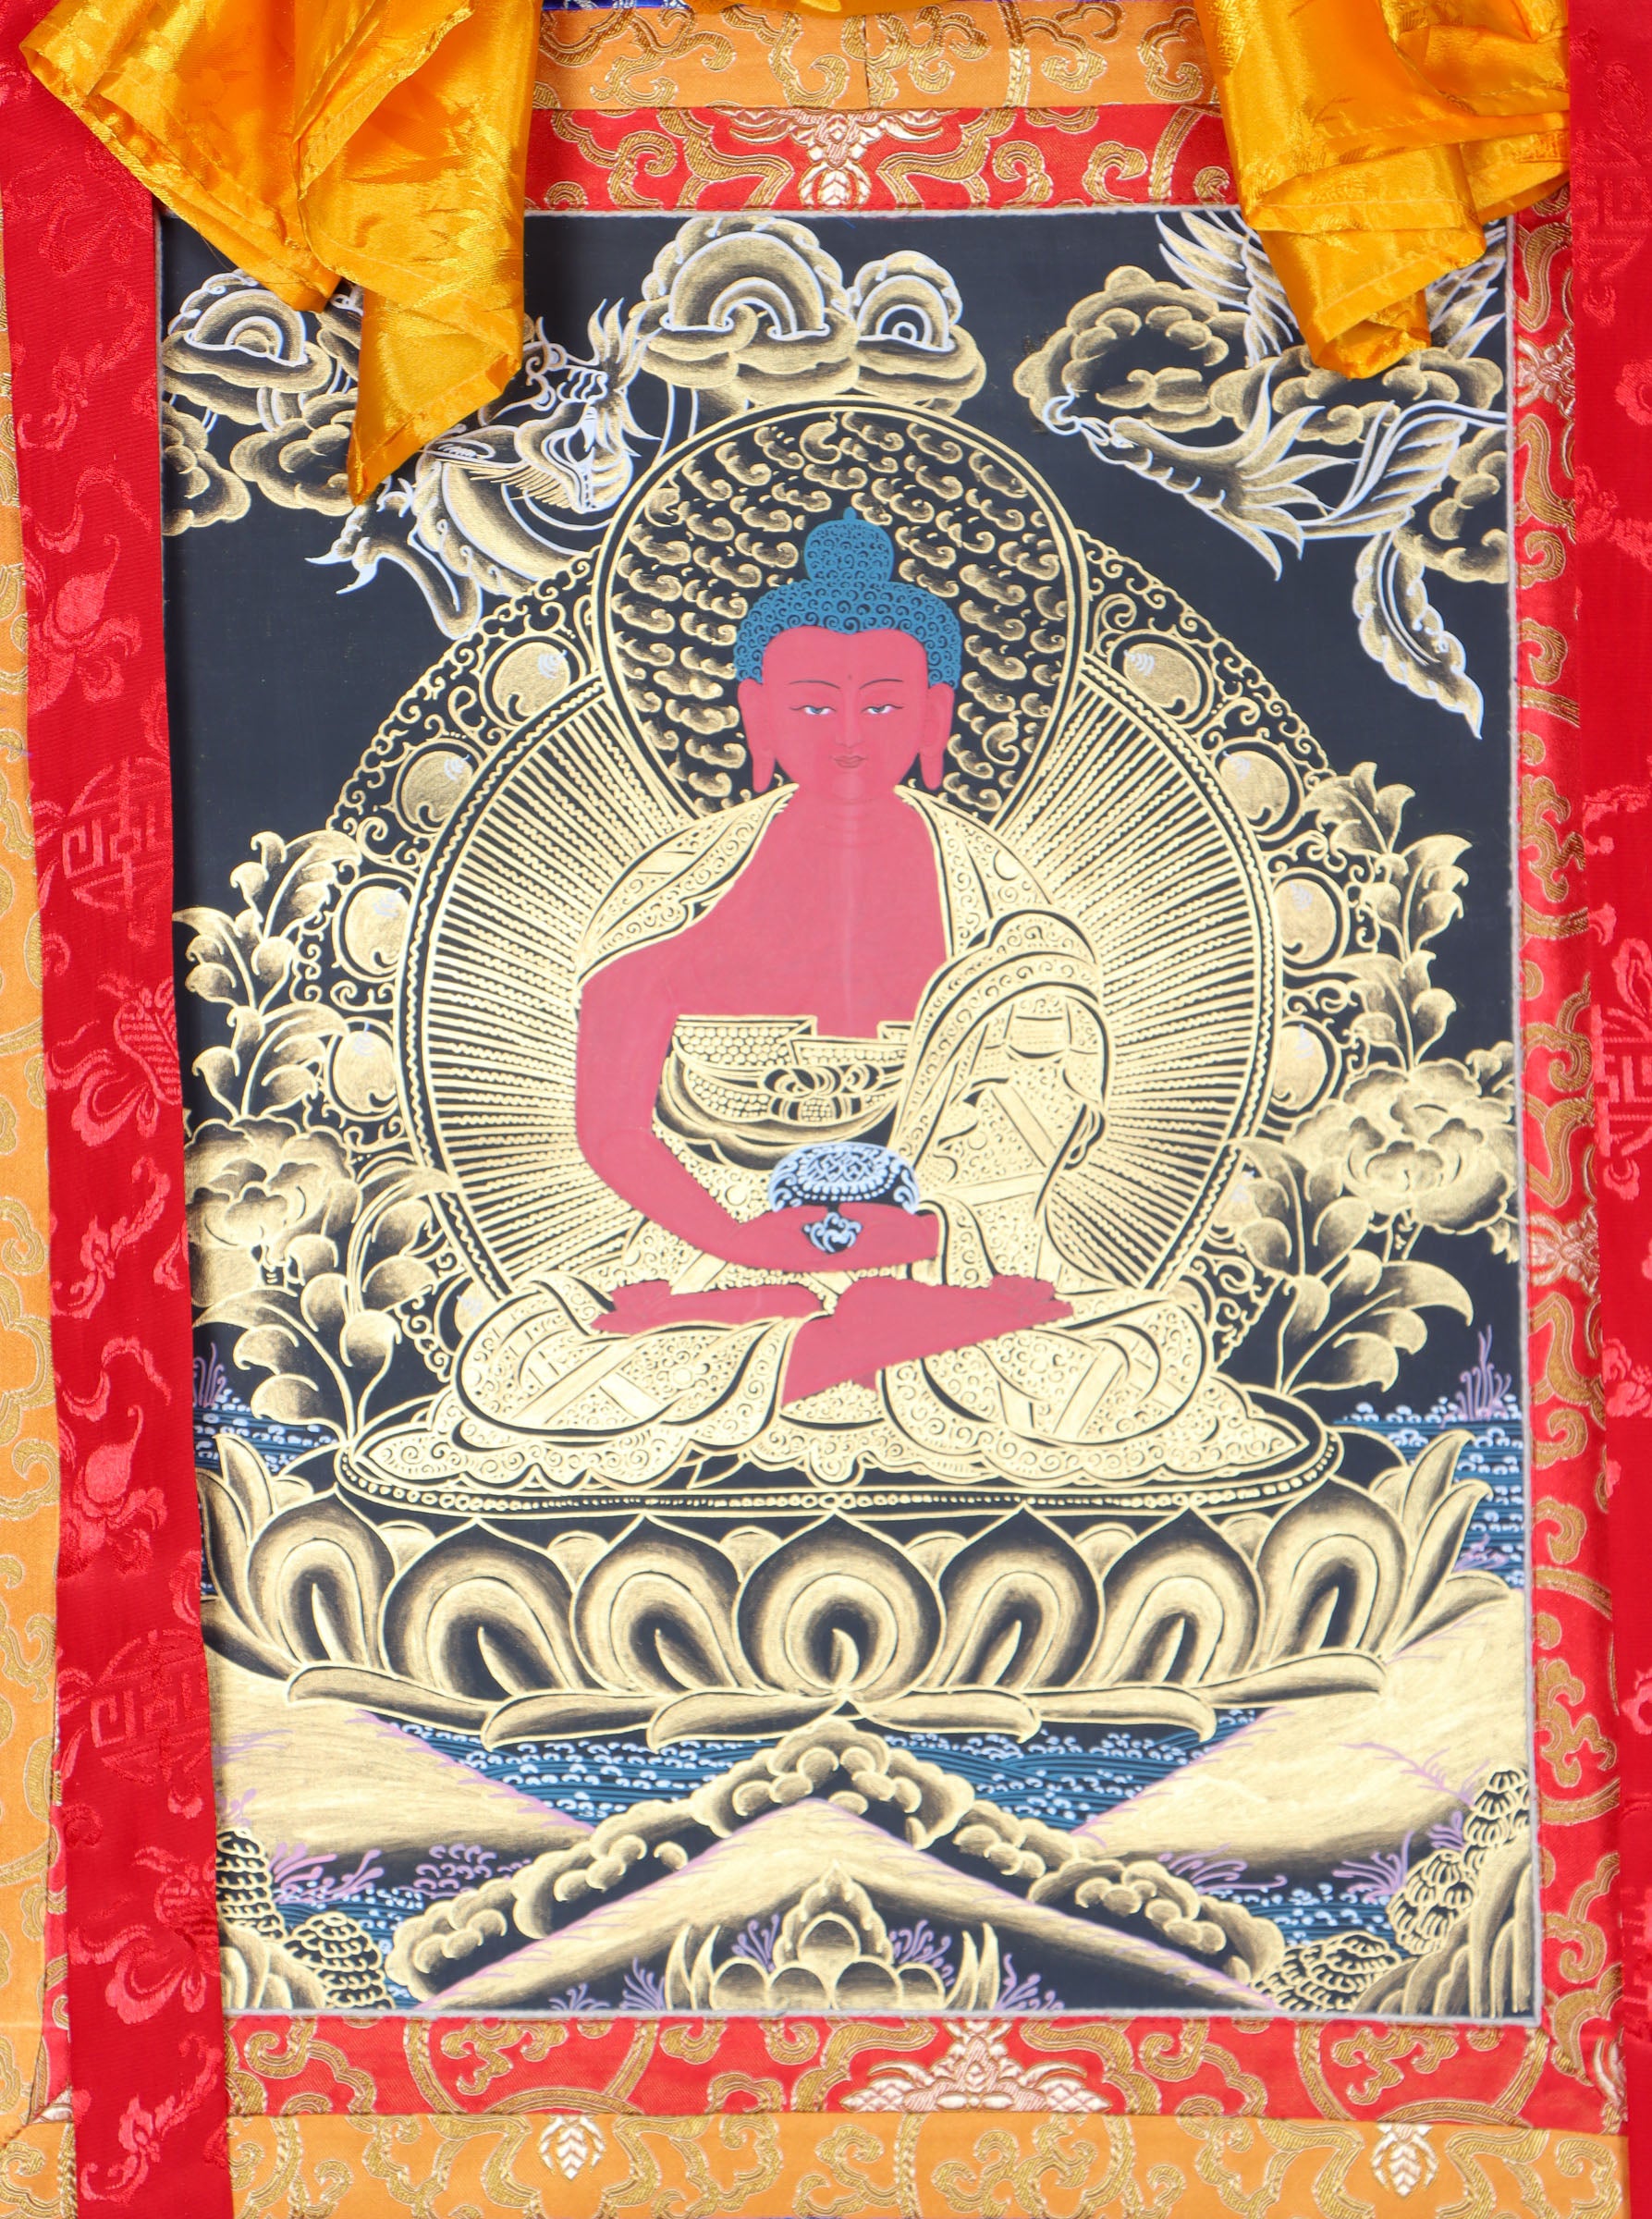 Amitabha Brocade Thangka Painting for enlightenment.